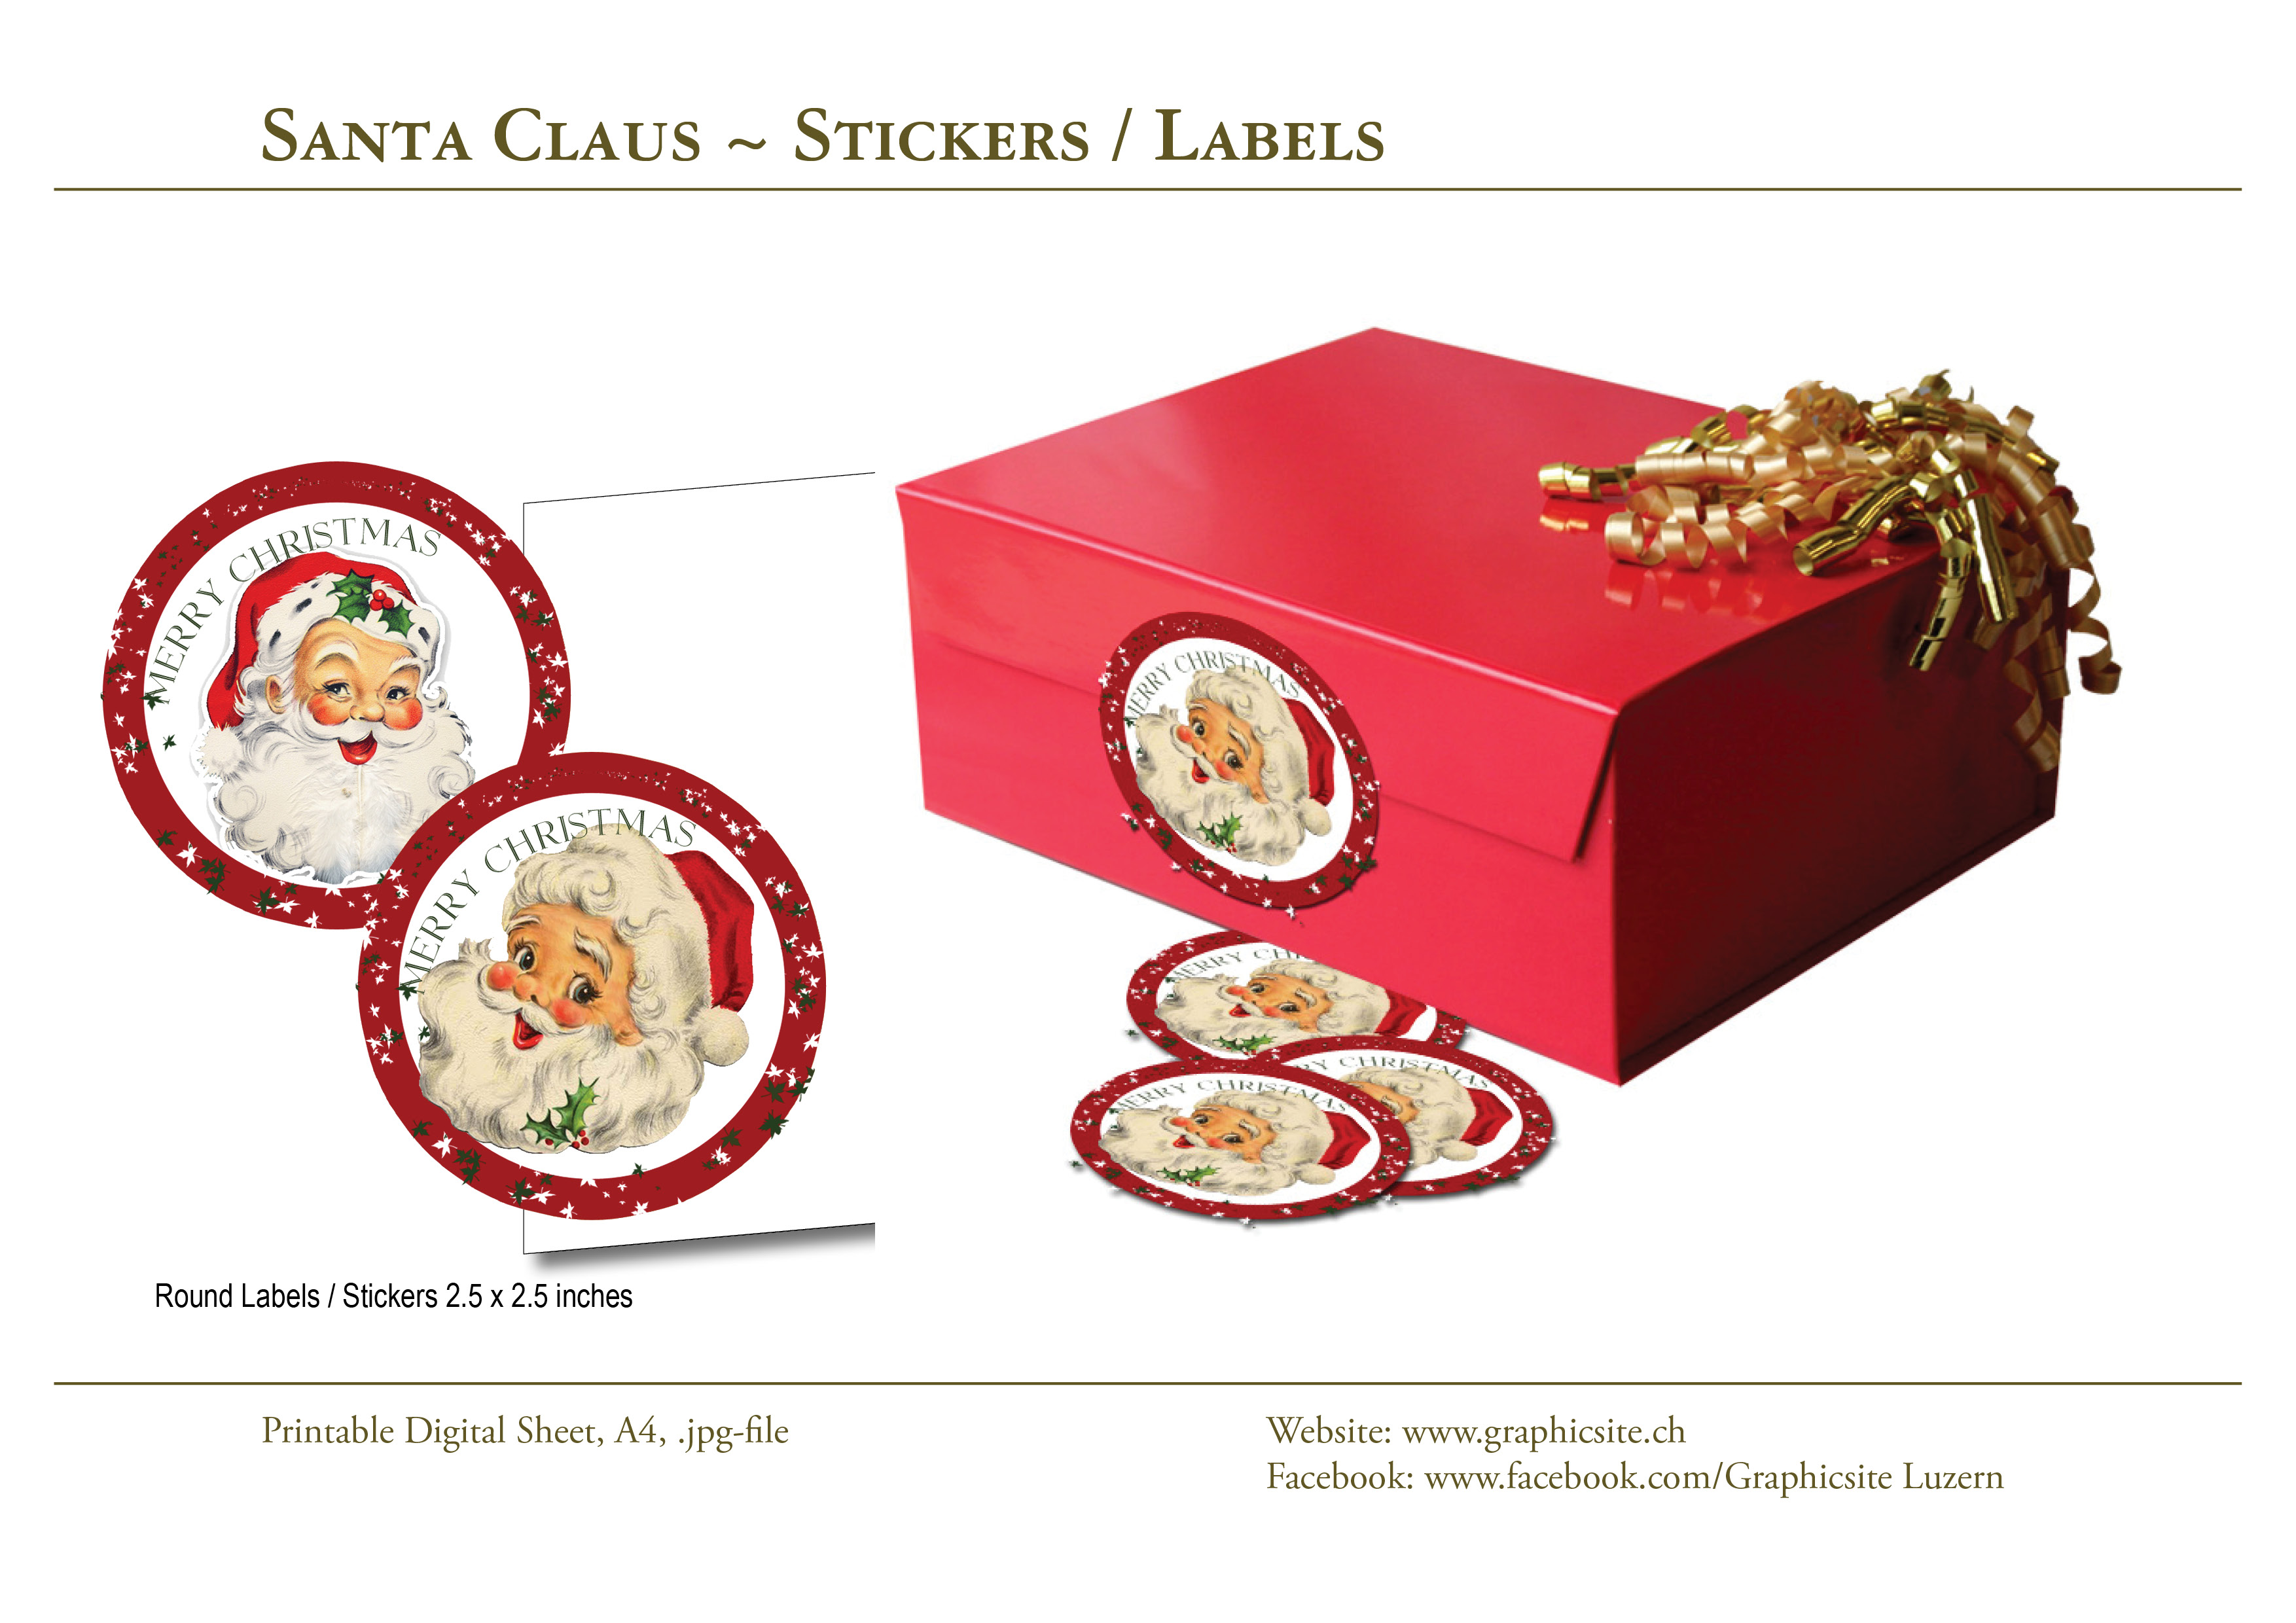 Printable Digital Sheets - Labels - SantaLabels - #christmas, #labels, #stickers, #printables, #gifts, #tags, #santaclaus, 